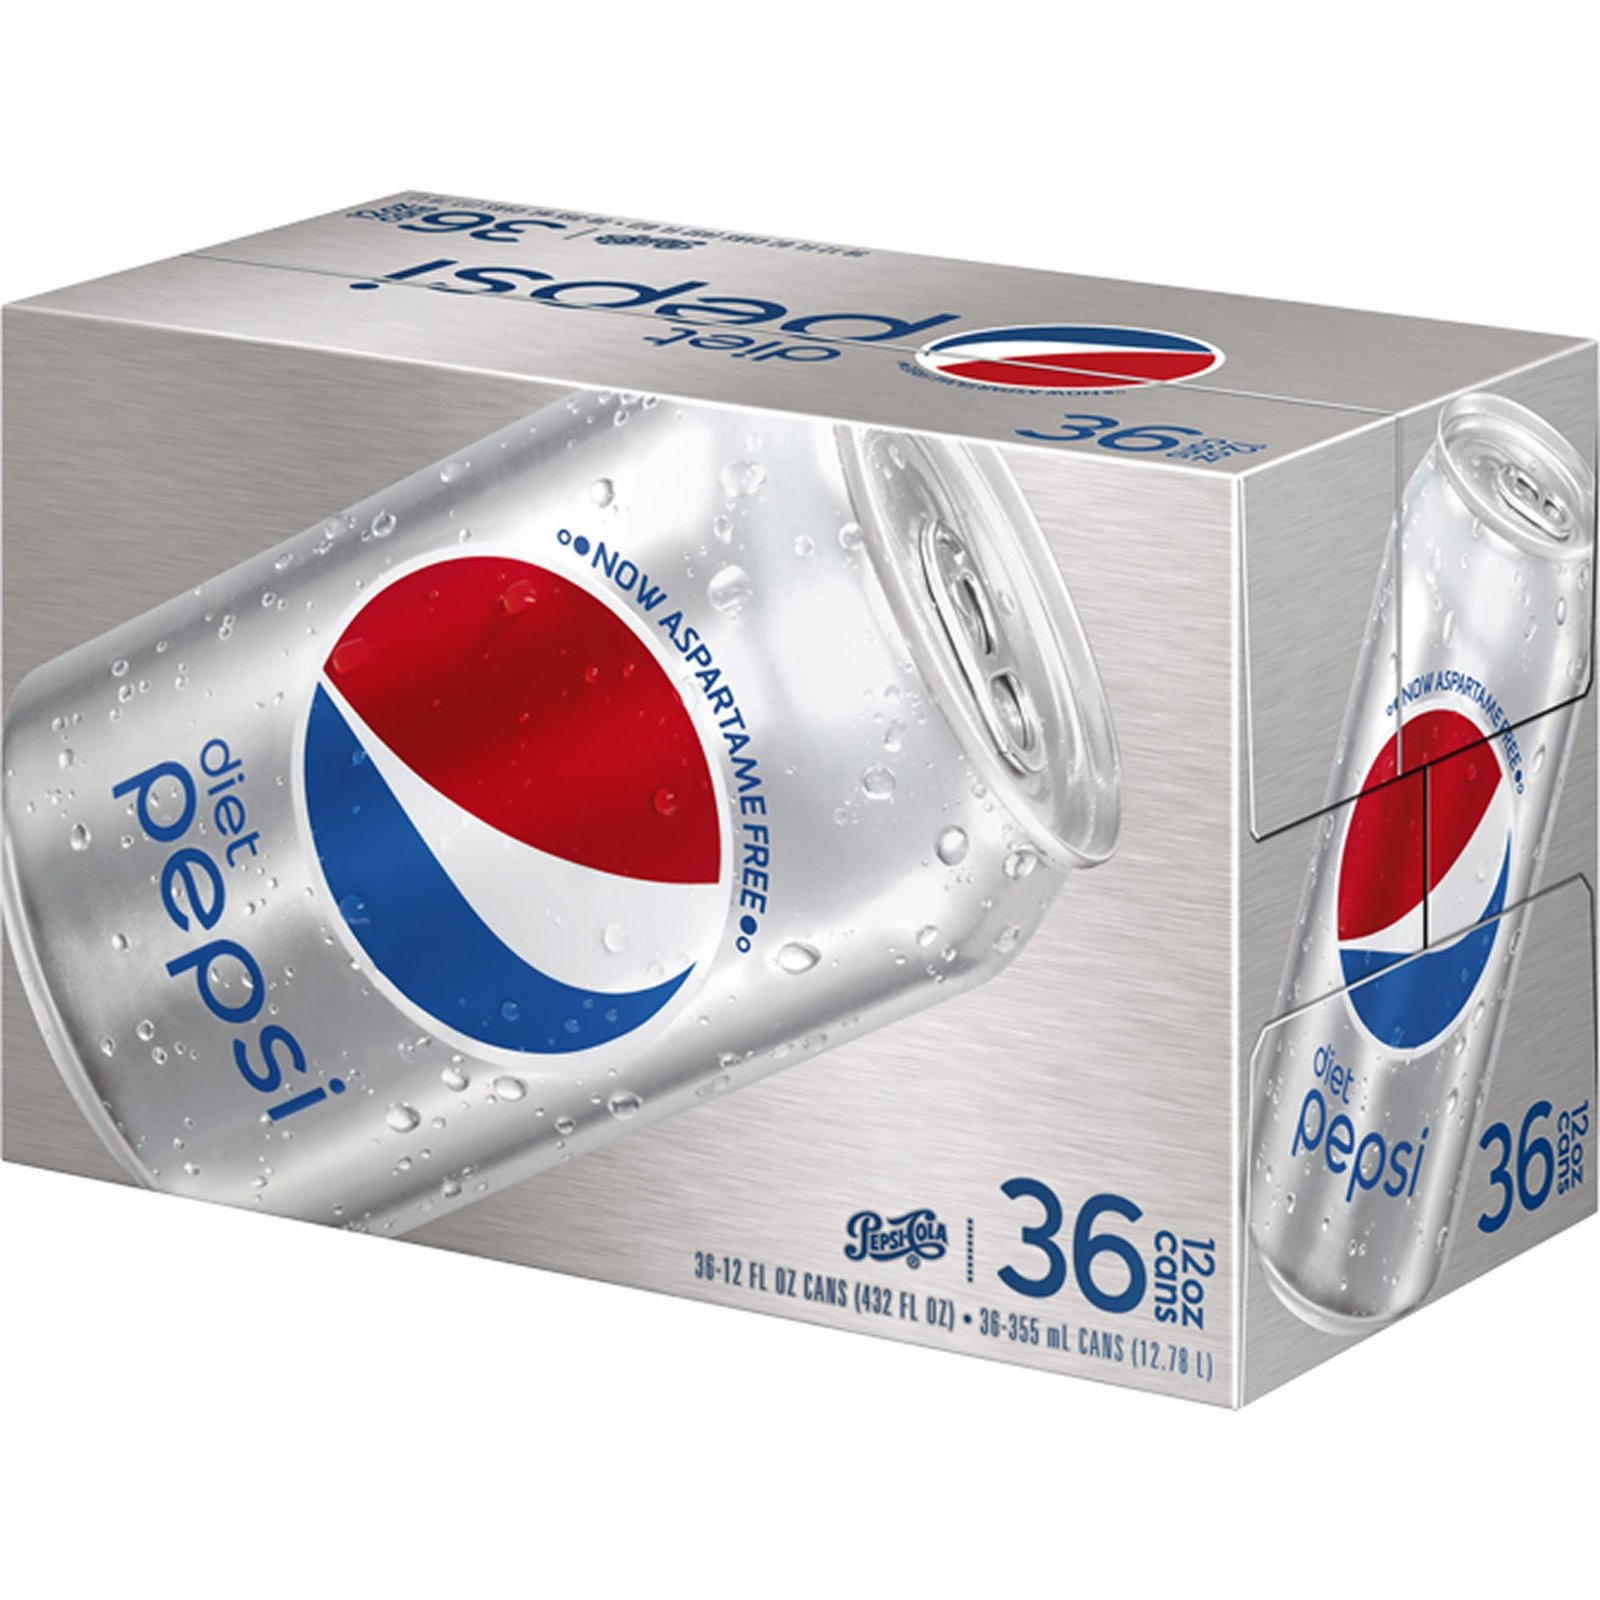 Diet Pepsi Cans, 36 pk./12 oz. - Soft Drinks